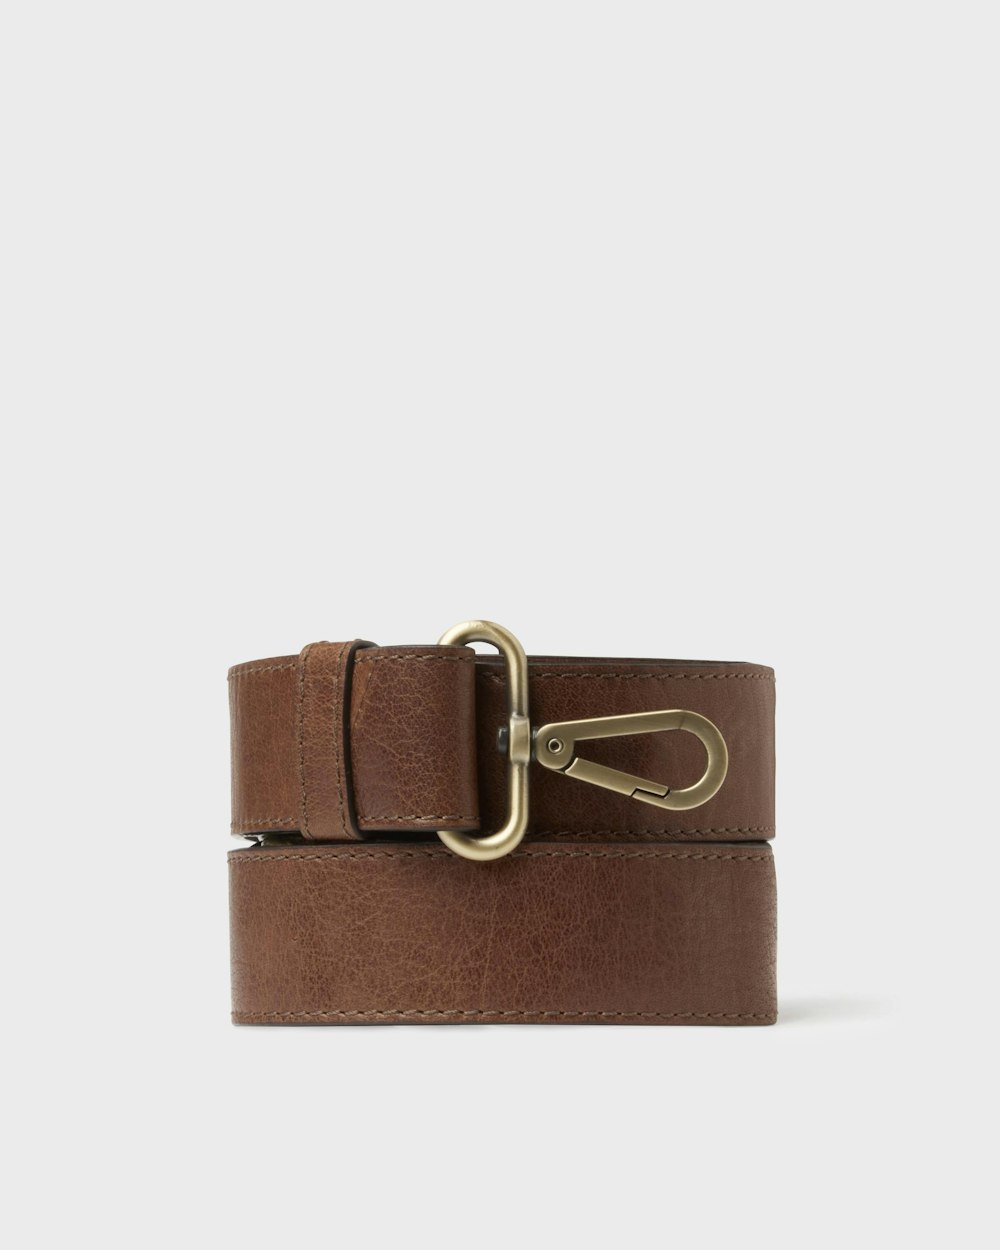 Shoulder straps for men at  - The Swedish leather brand